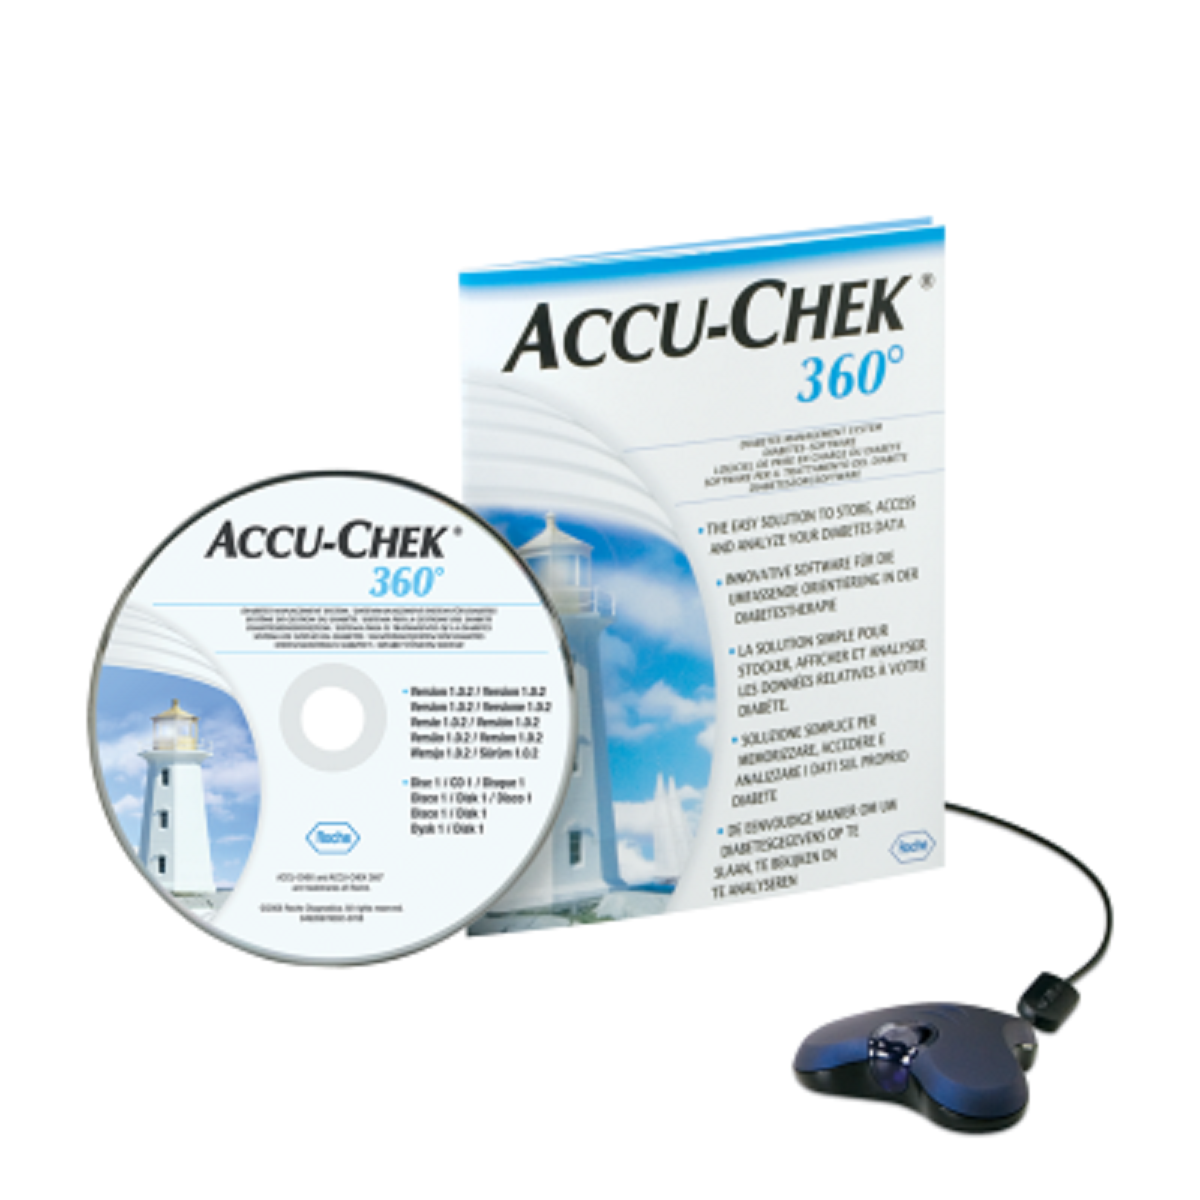 accu chek guide pc software download